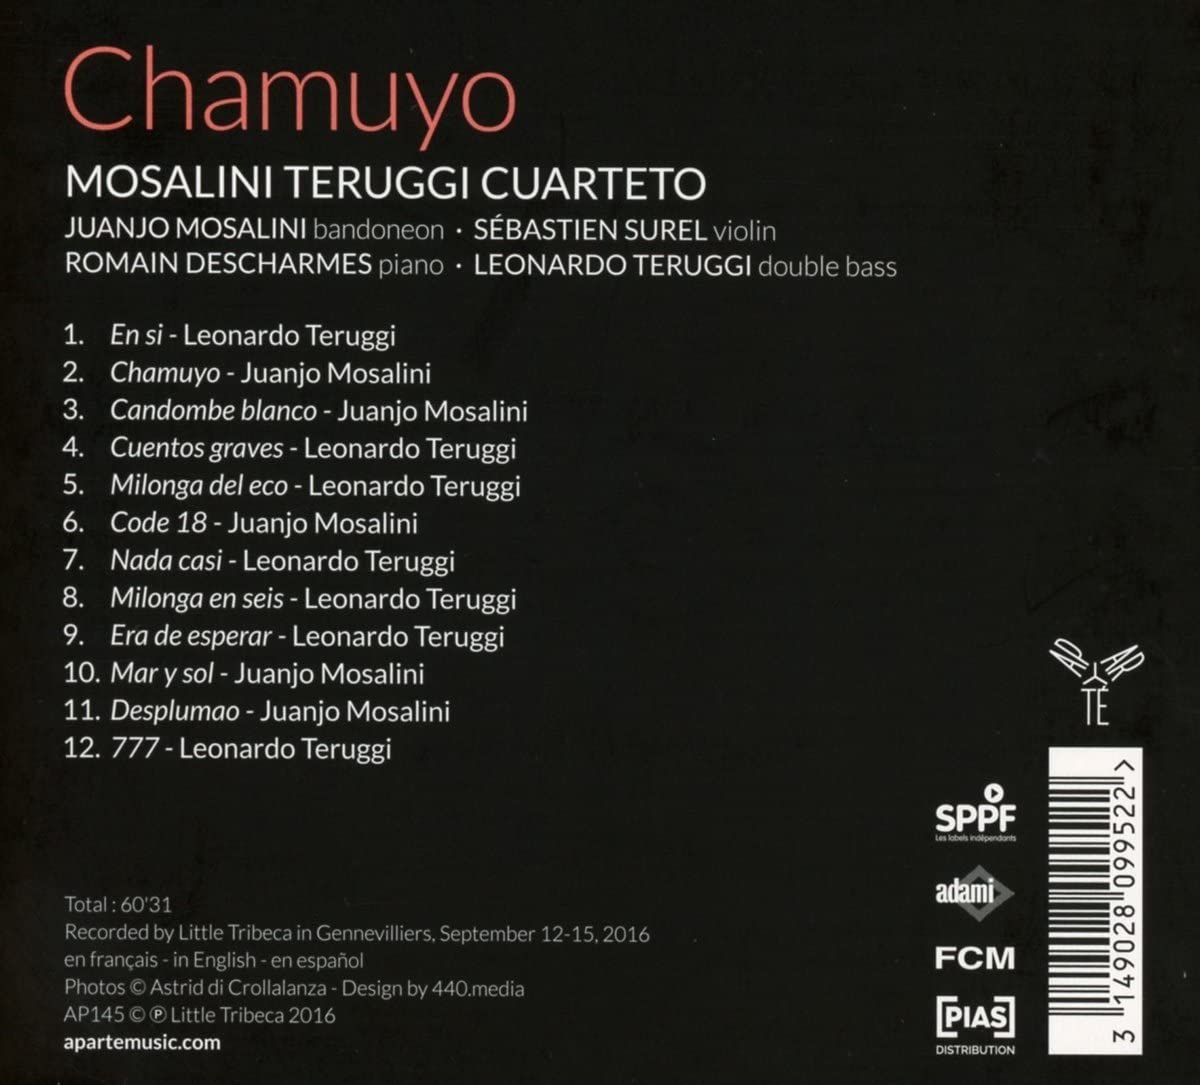 Mosalini Teruggi Cuarteto: Chamuyo - slide-1